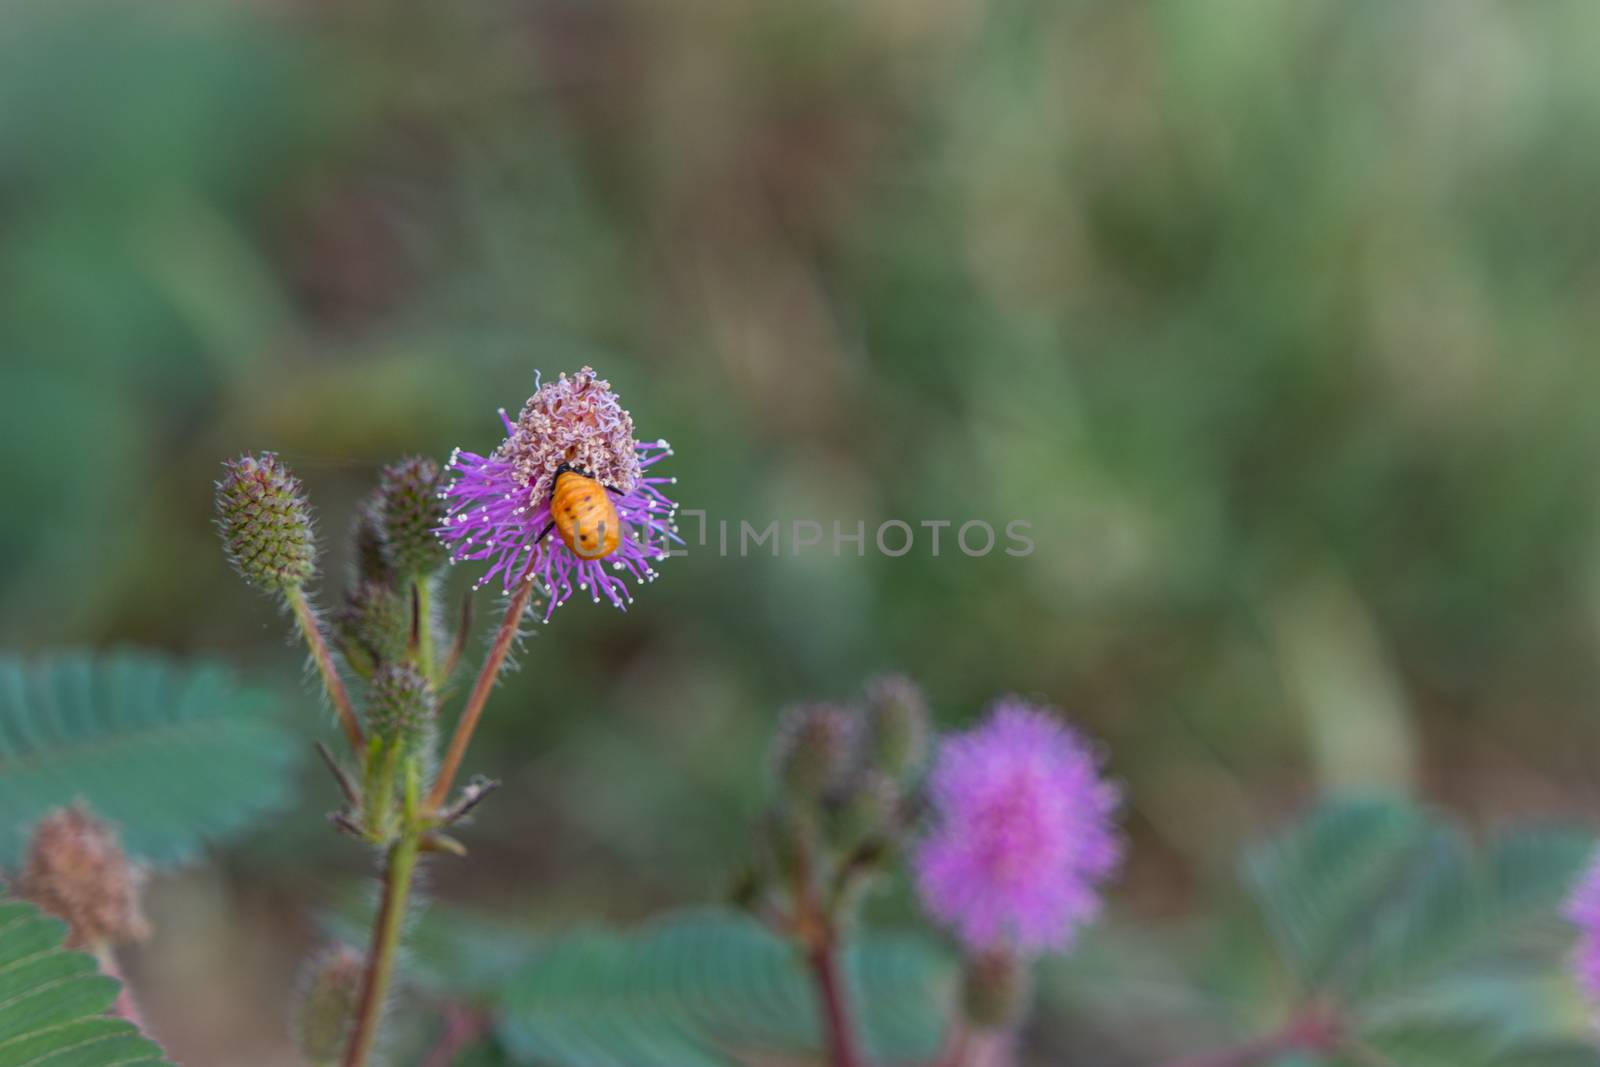 Closeup to Sensitive Plant Flower, Mimosa Pudica.